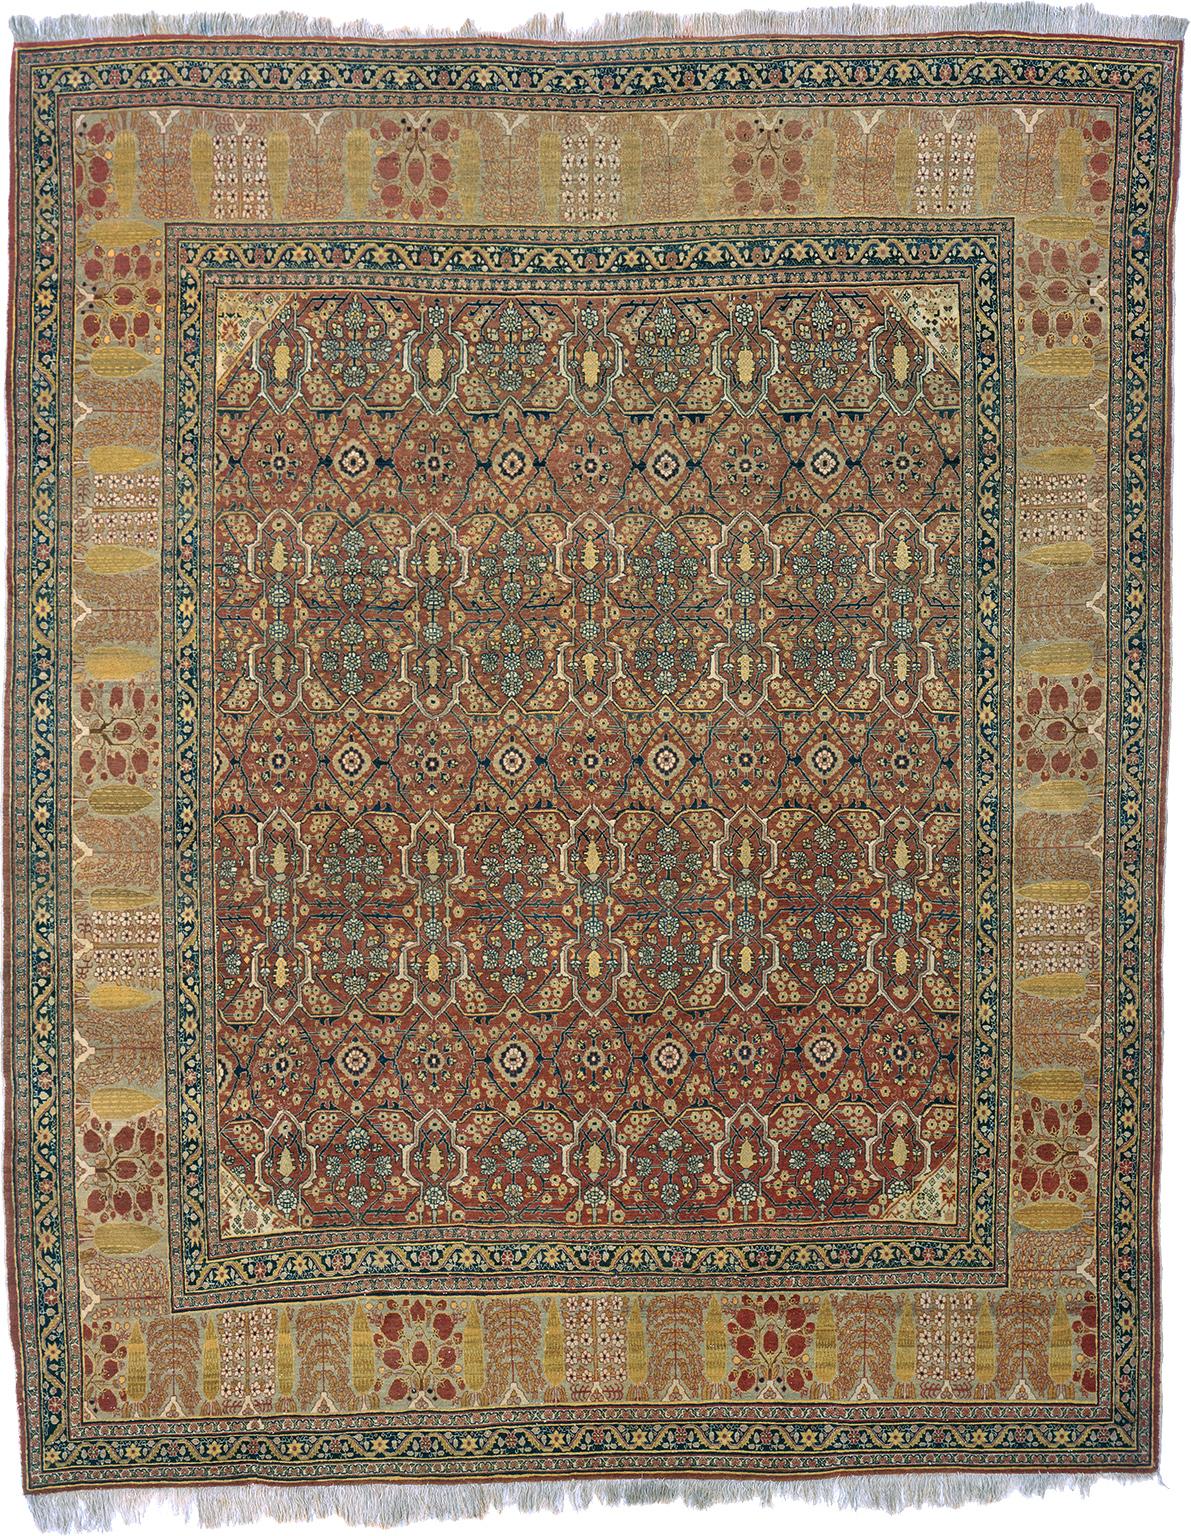 Late 19th Century Persian Tabriz Rug